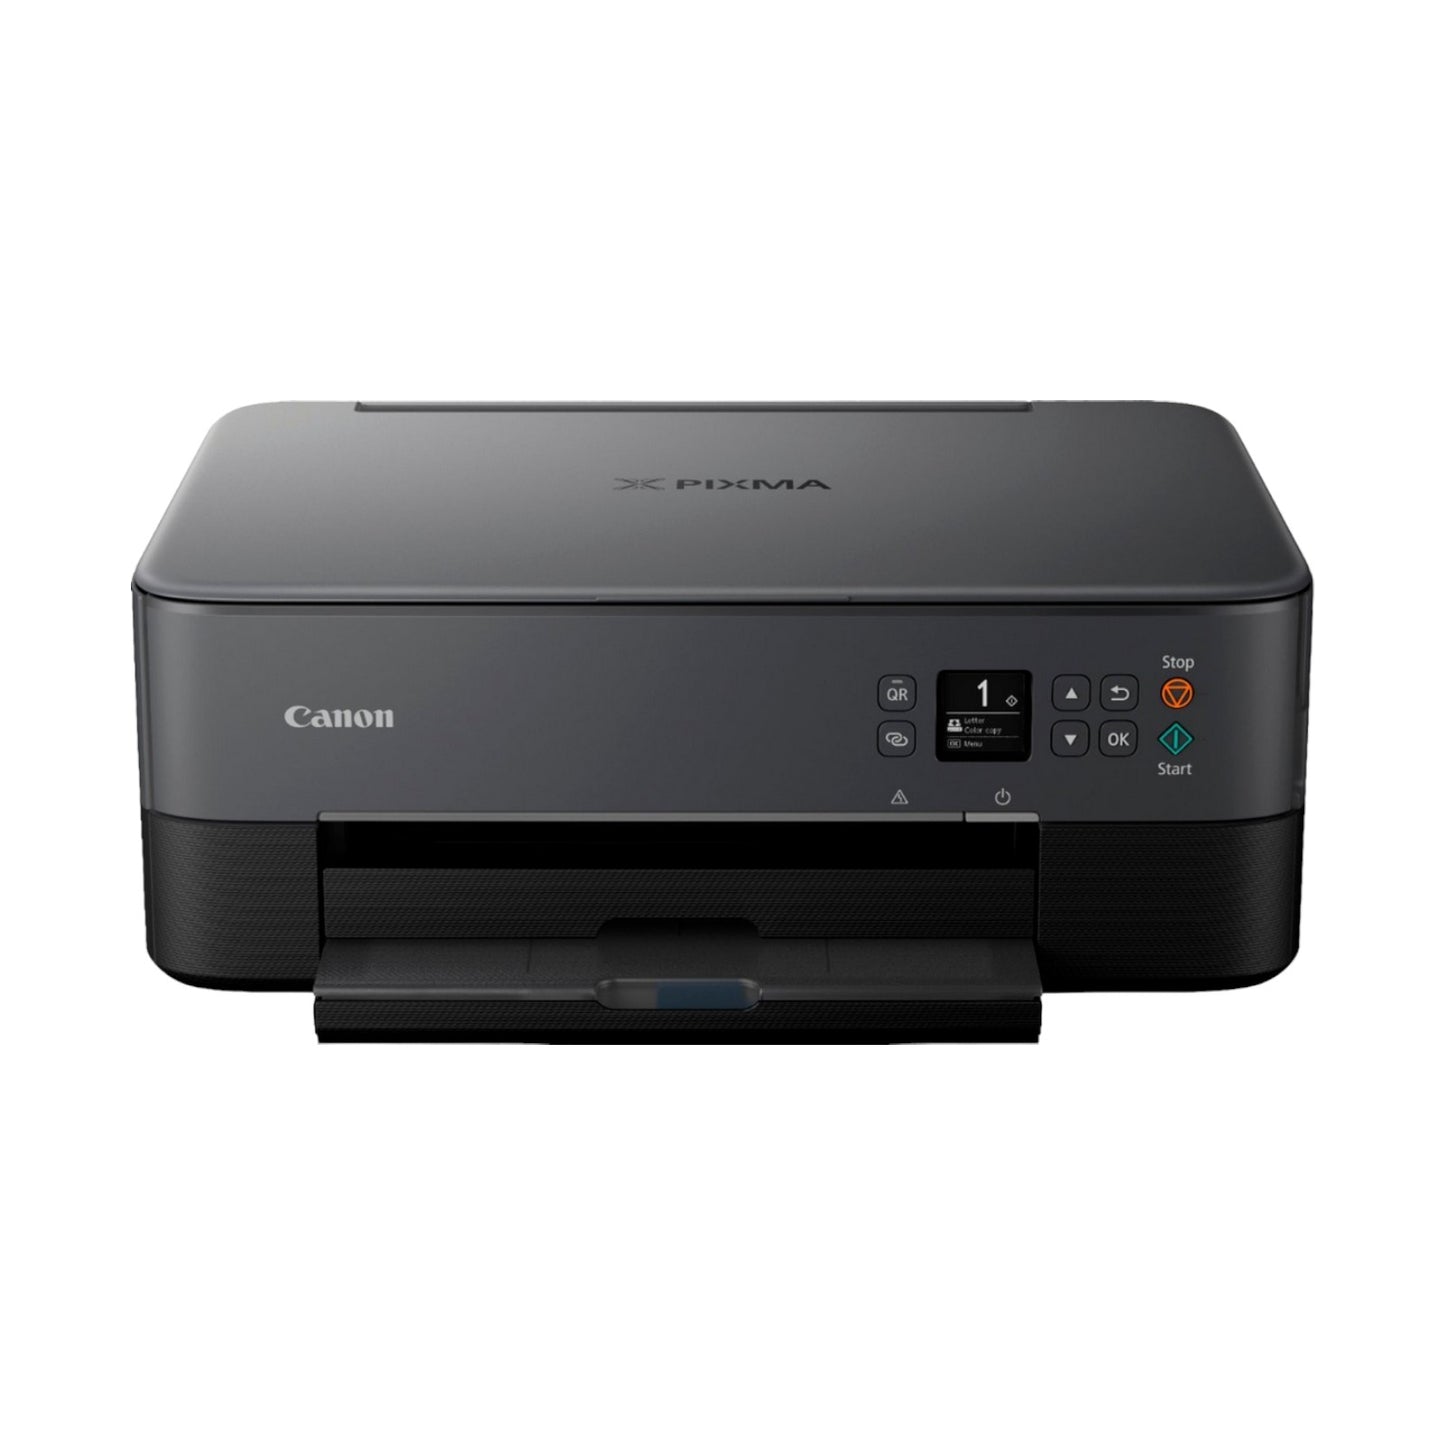 Canon PIXMA TS6420a All-in-One Wireless Inkjet Printer Black